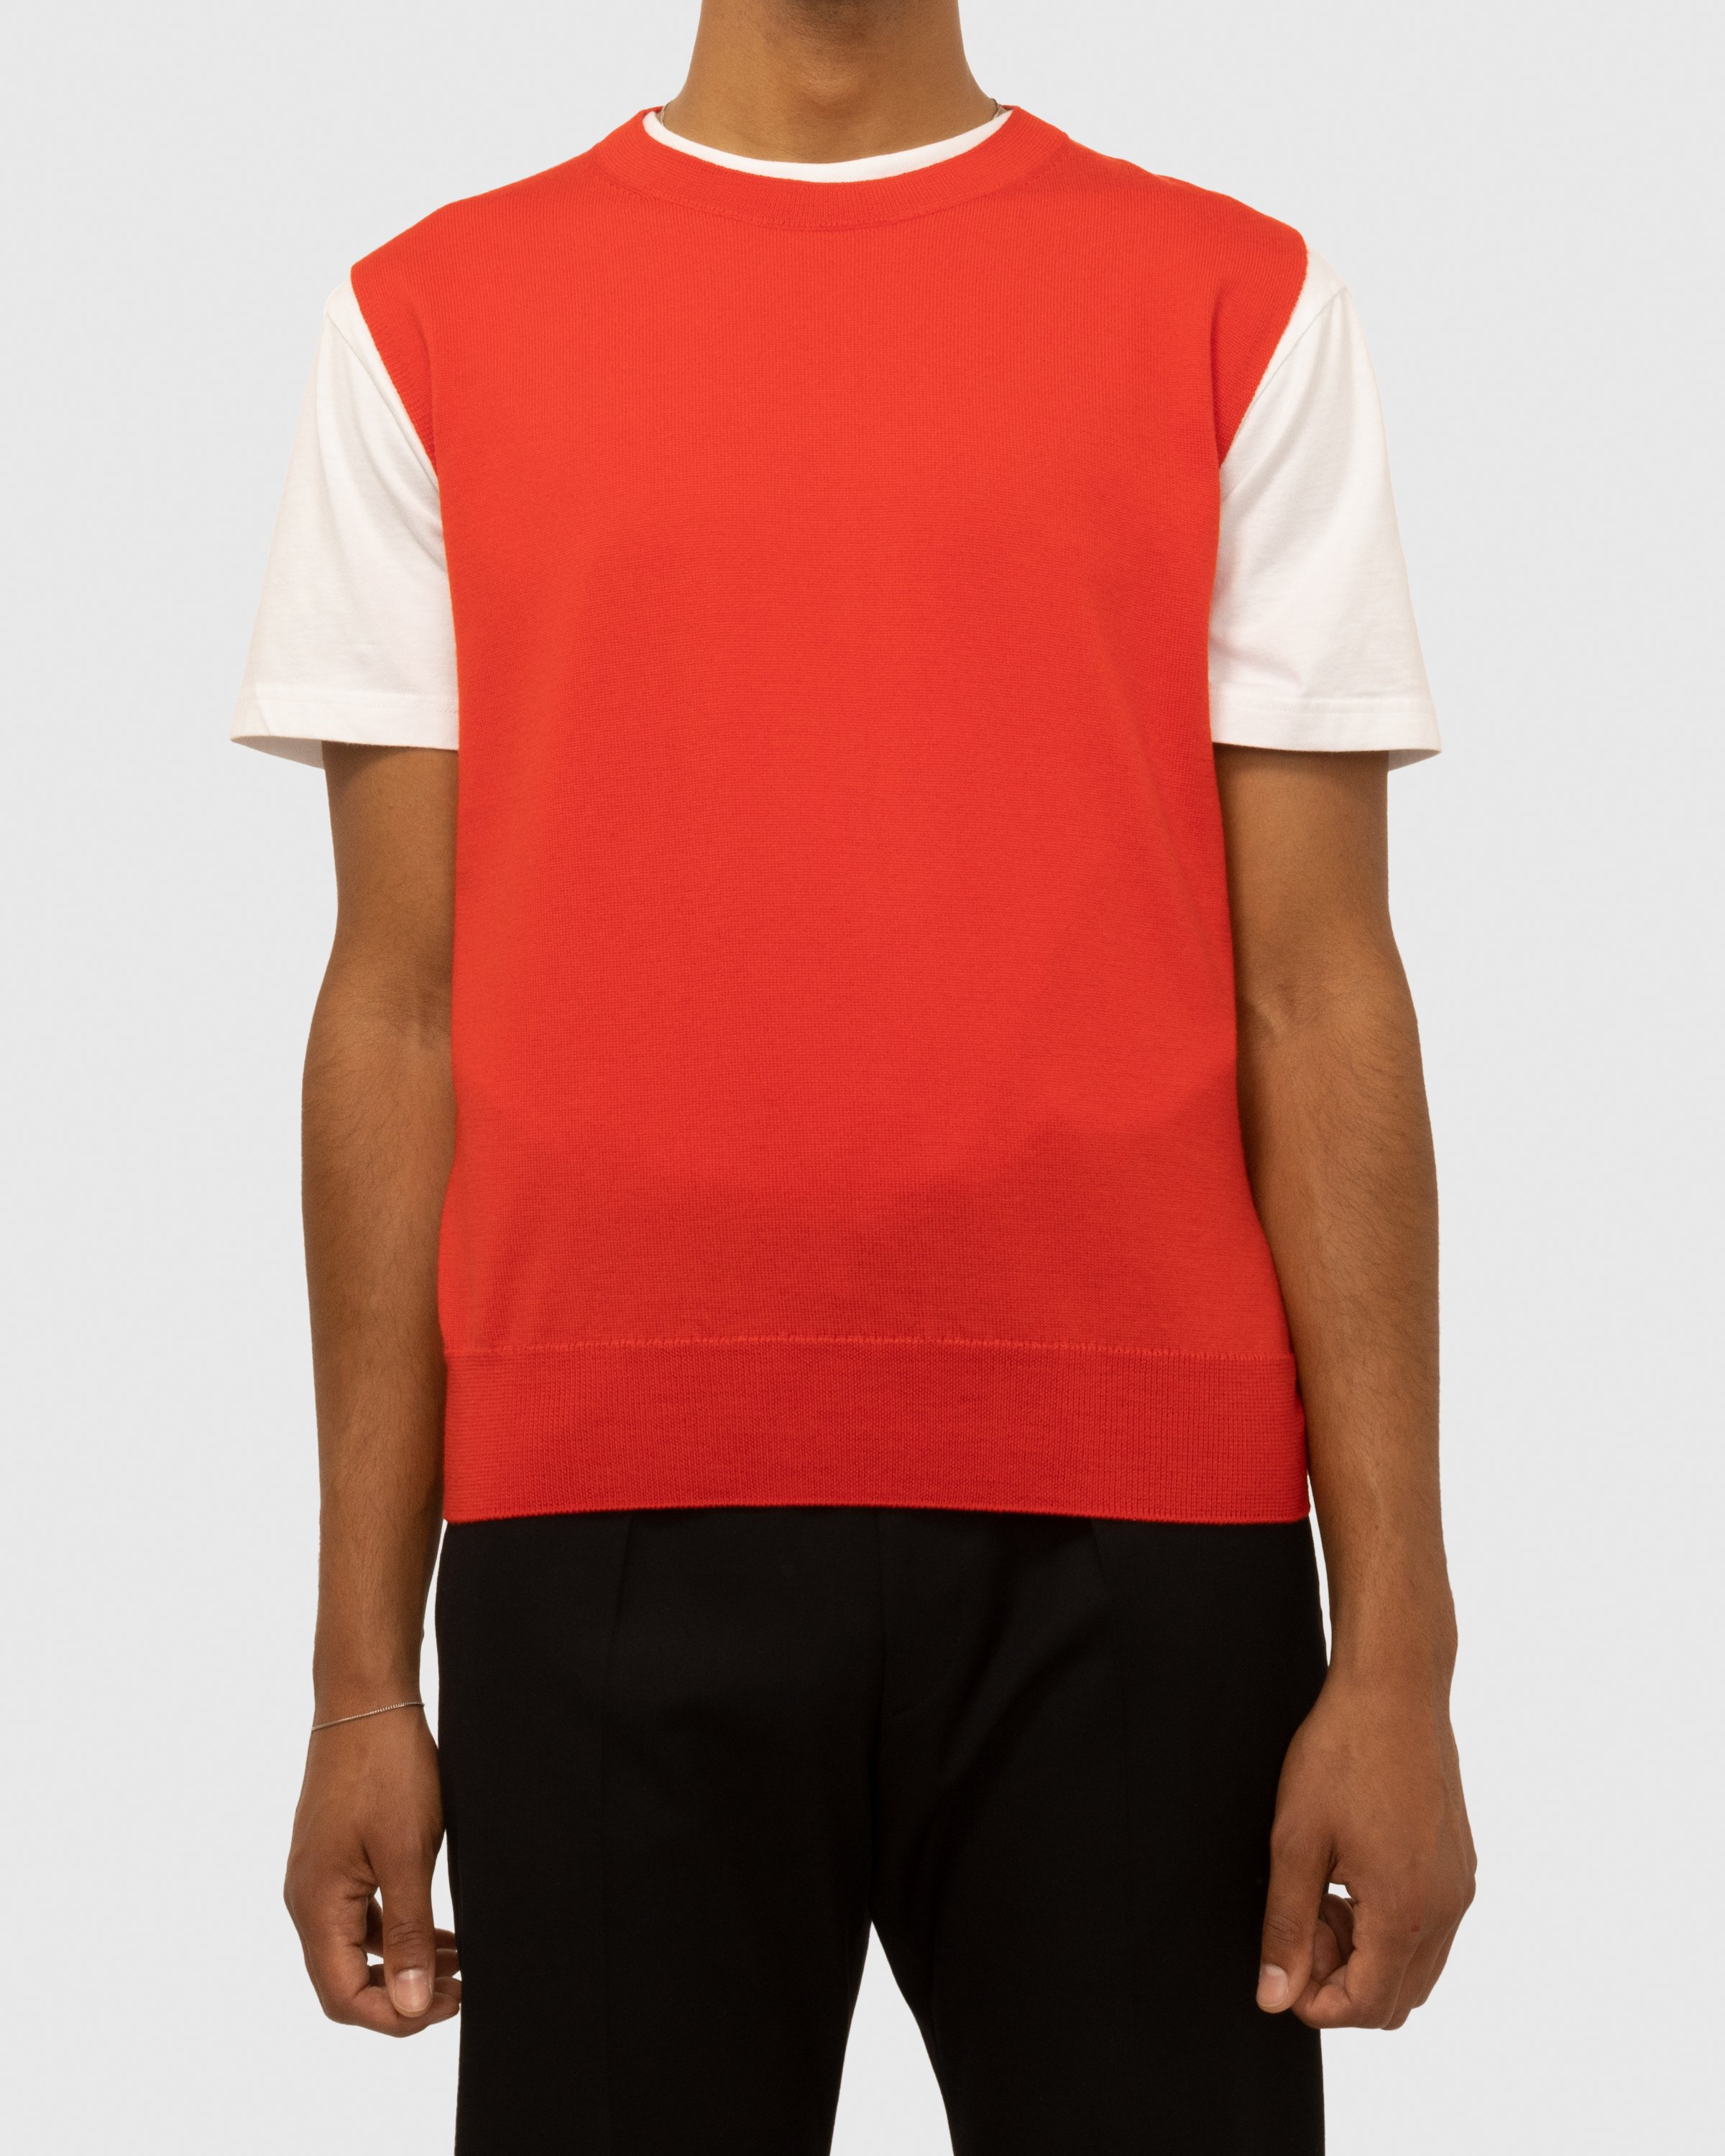 Dries van Noten - Neptune Sweater Vest Red - Clothing - Red - Image 4